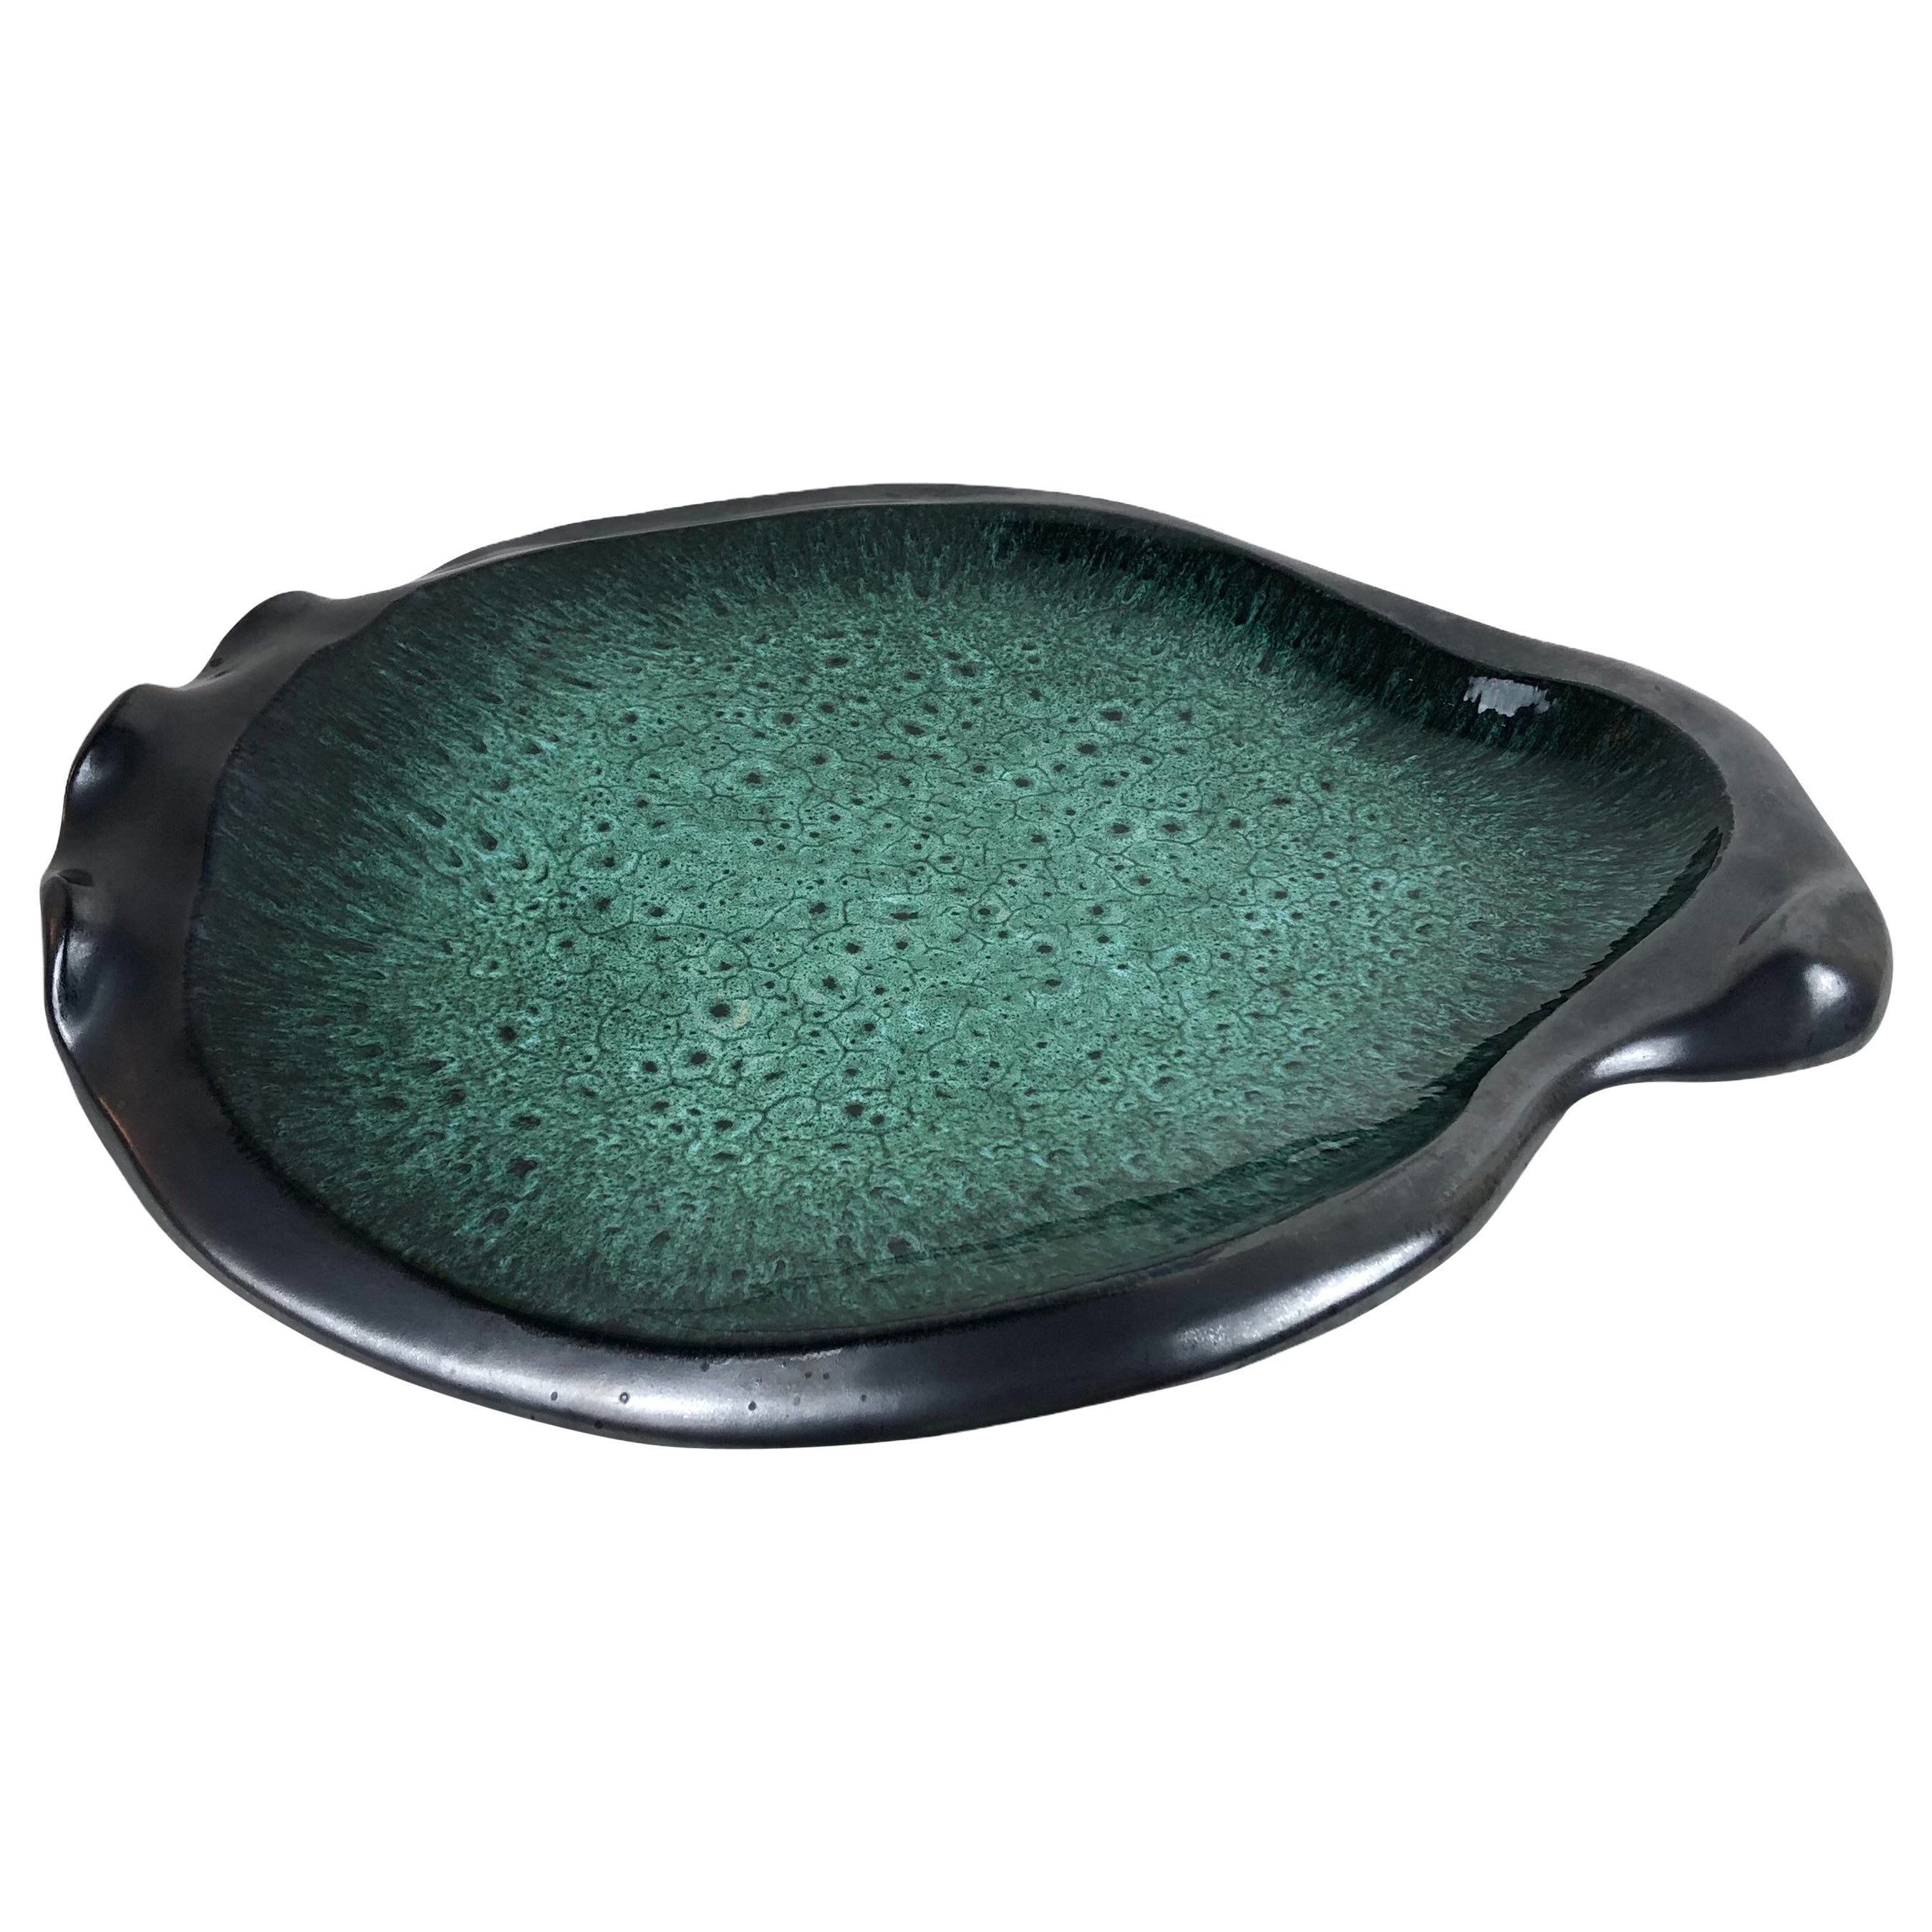 Large French Midcentury Black Matte Glazed Green Ceramic Bowl or Platter, Signed